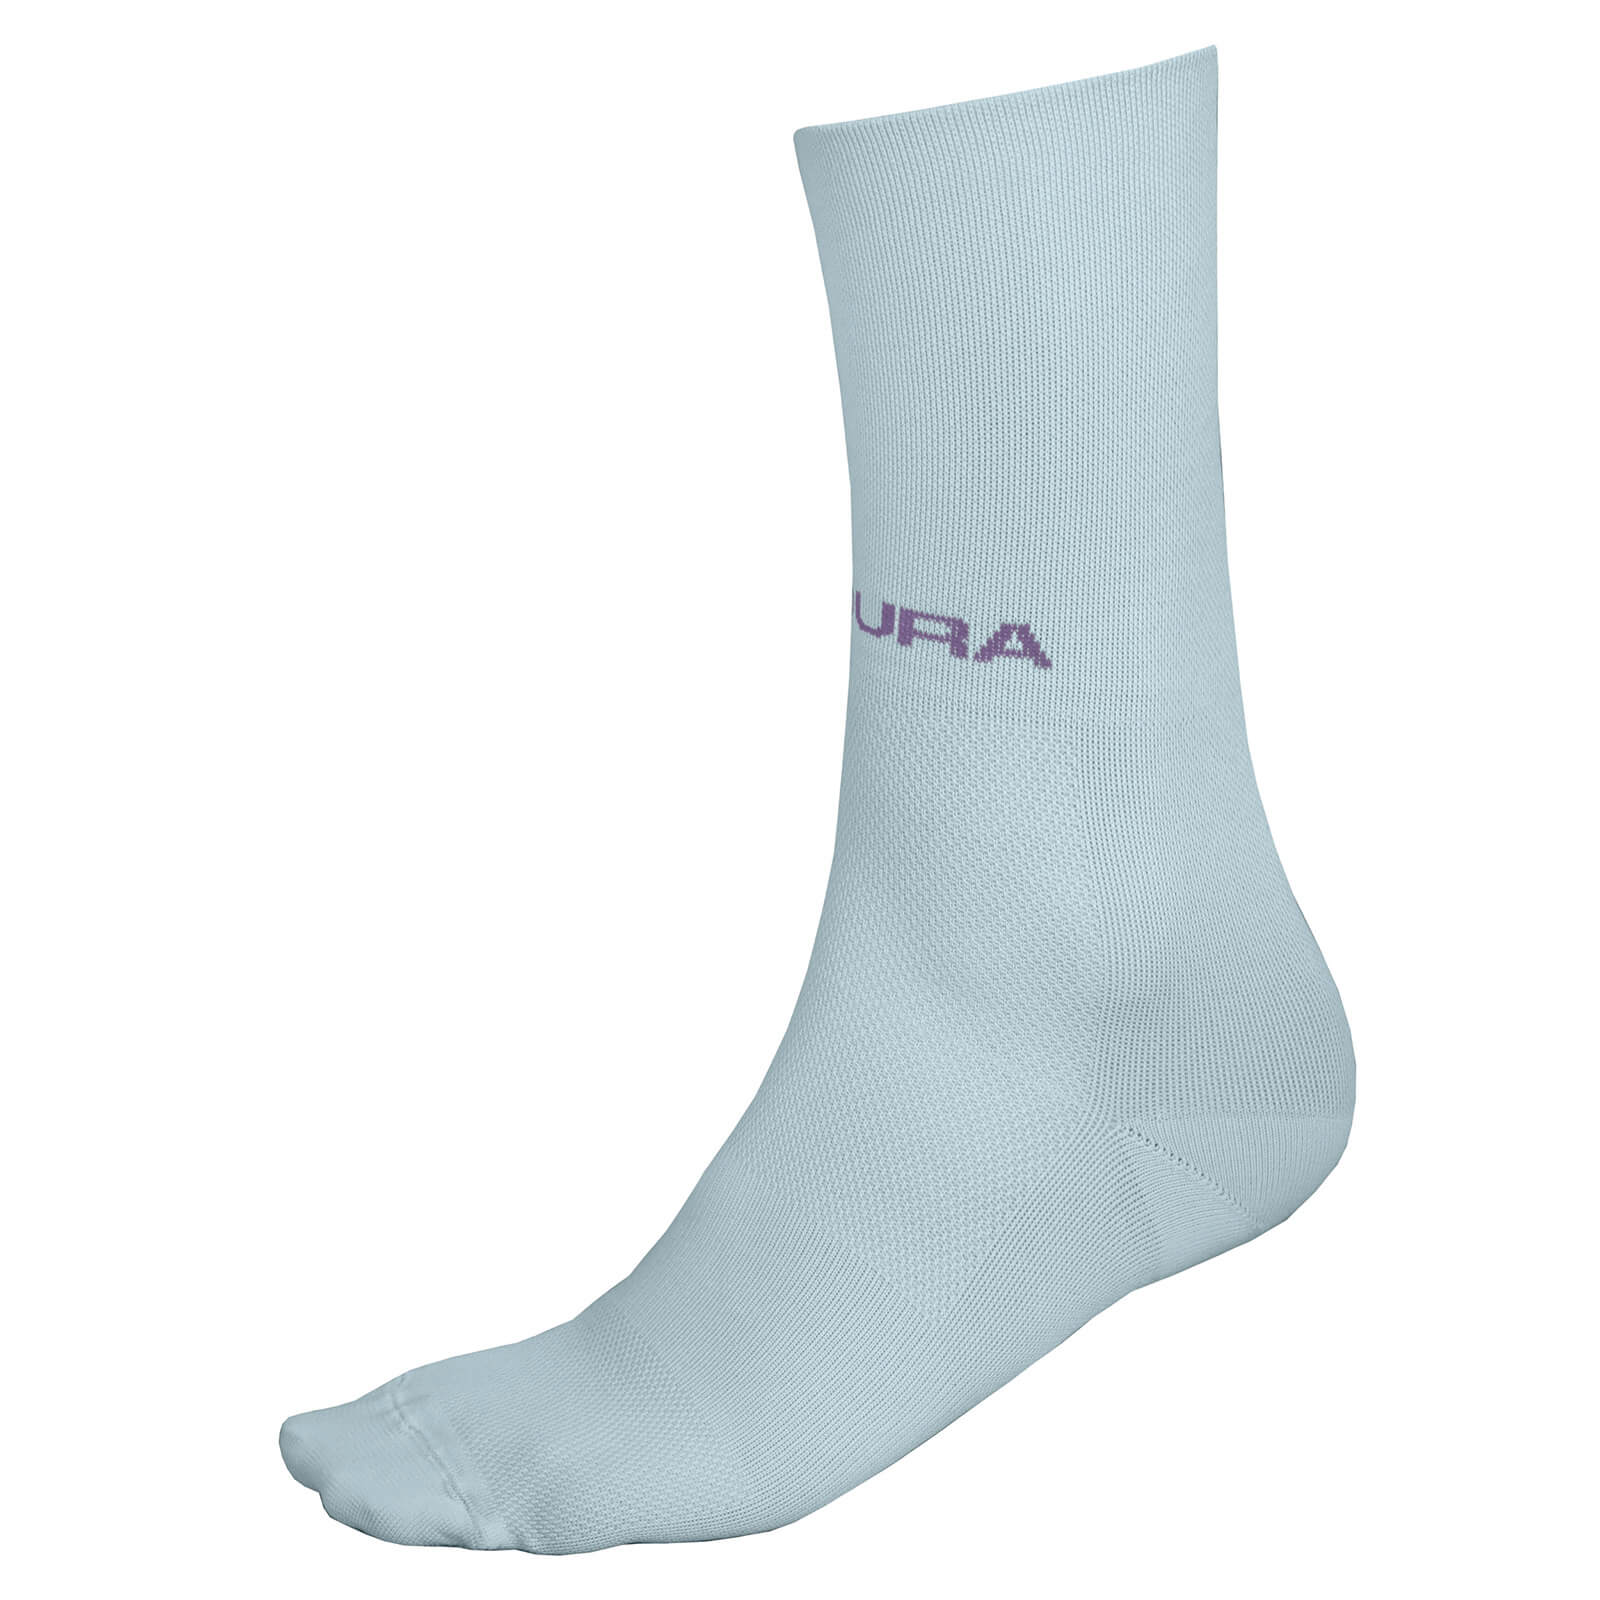 Endura Men's Pro SL Sock II - Concrete Grey